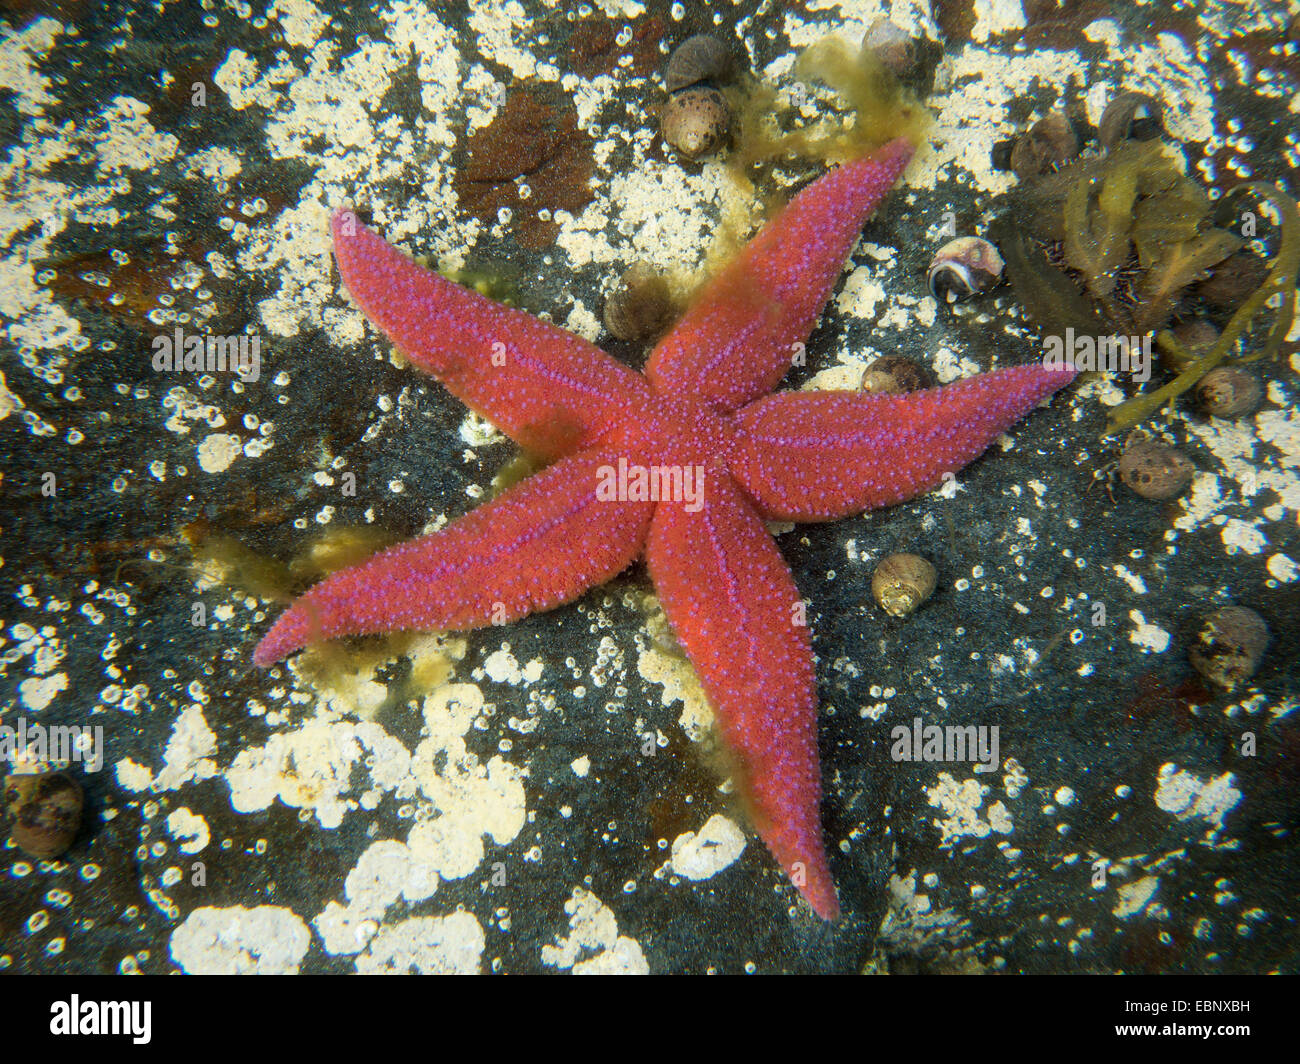 Seastars, starfishes (Henricia sanguinolenta), seduta su una roccia, Norvegia, Hitra Foto Stock